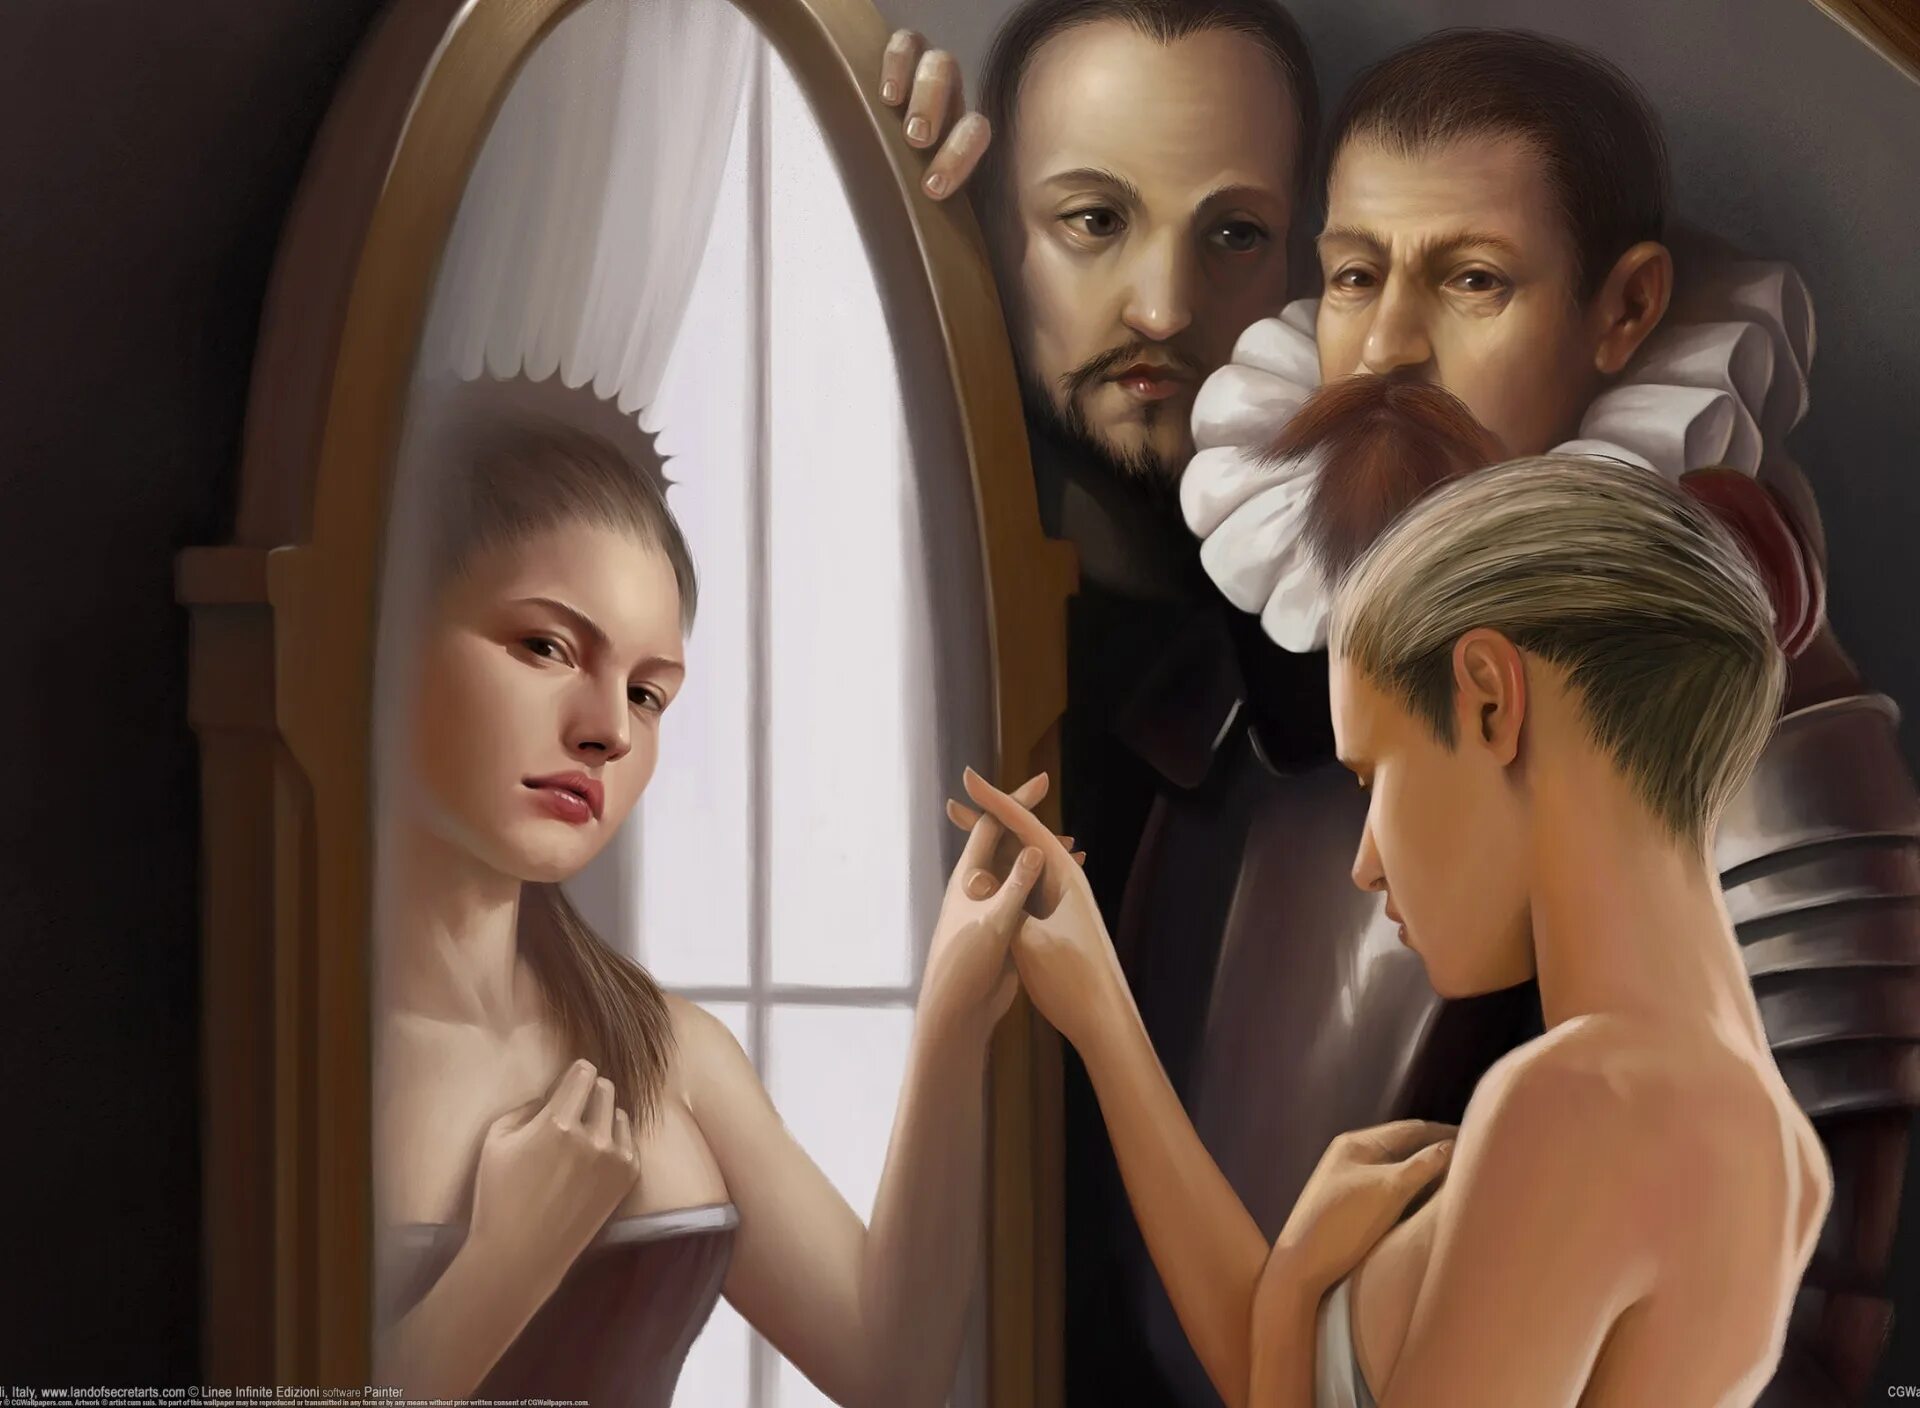 Коррадо Ванелли. Отражение в зеркале. Портрет с отражением. Картина отражение в зеркале.